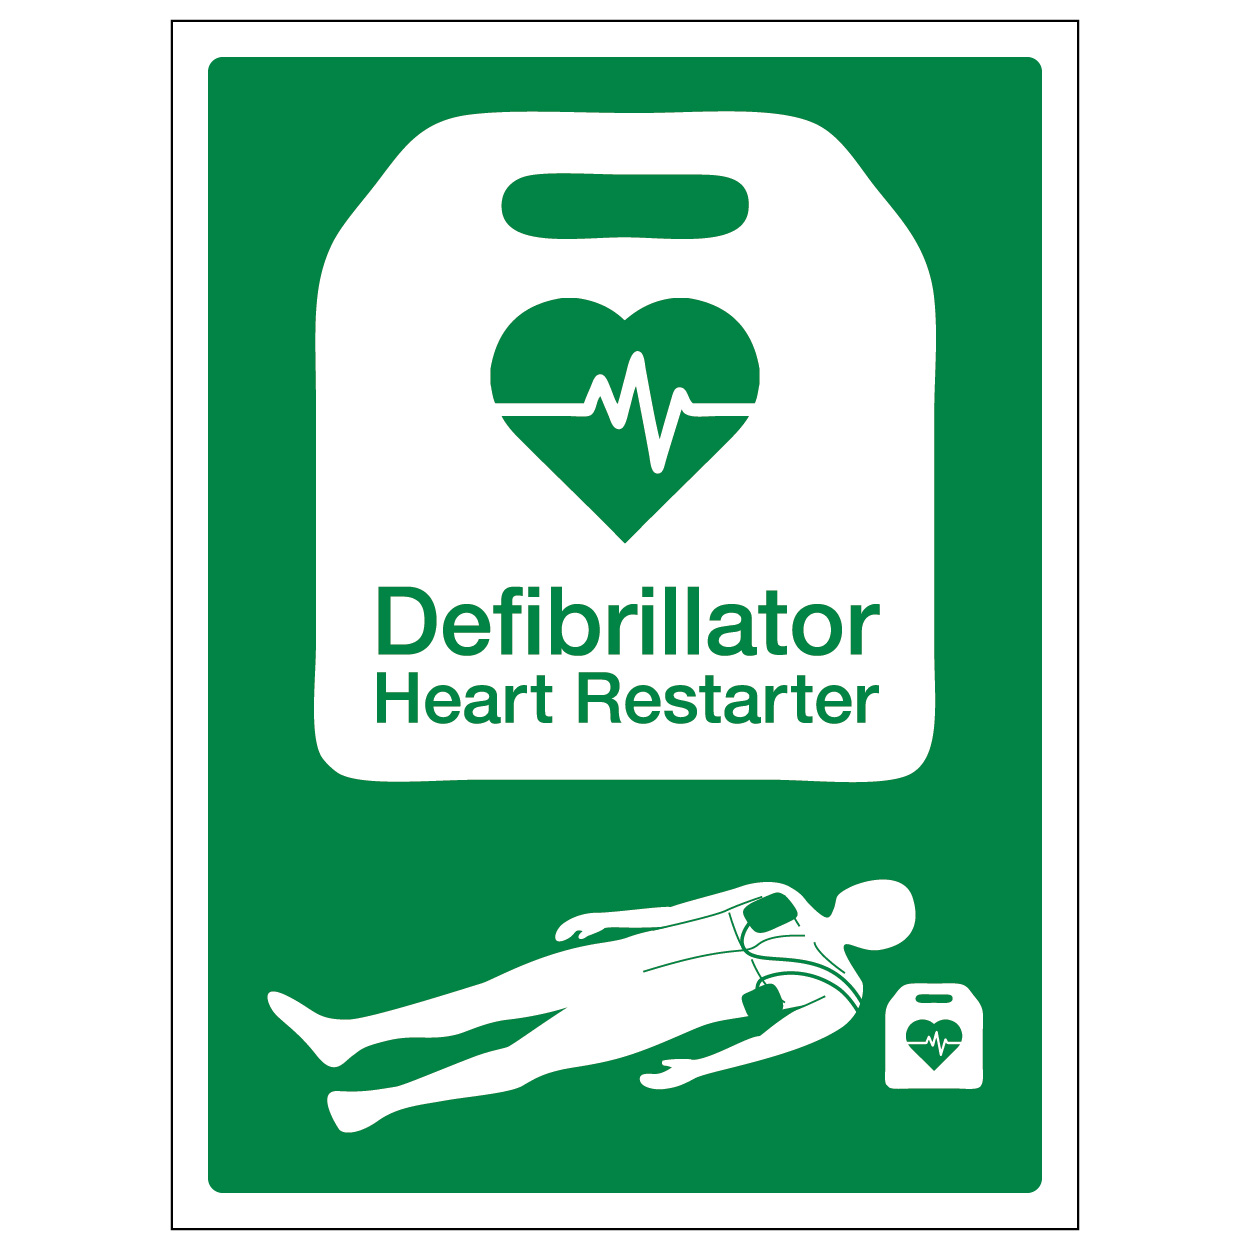 638128297004550743_defibrillator-heart-restarter_web.png